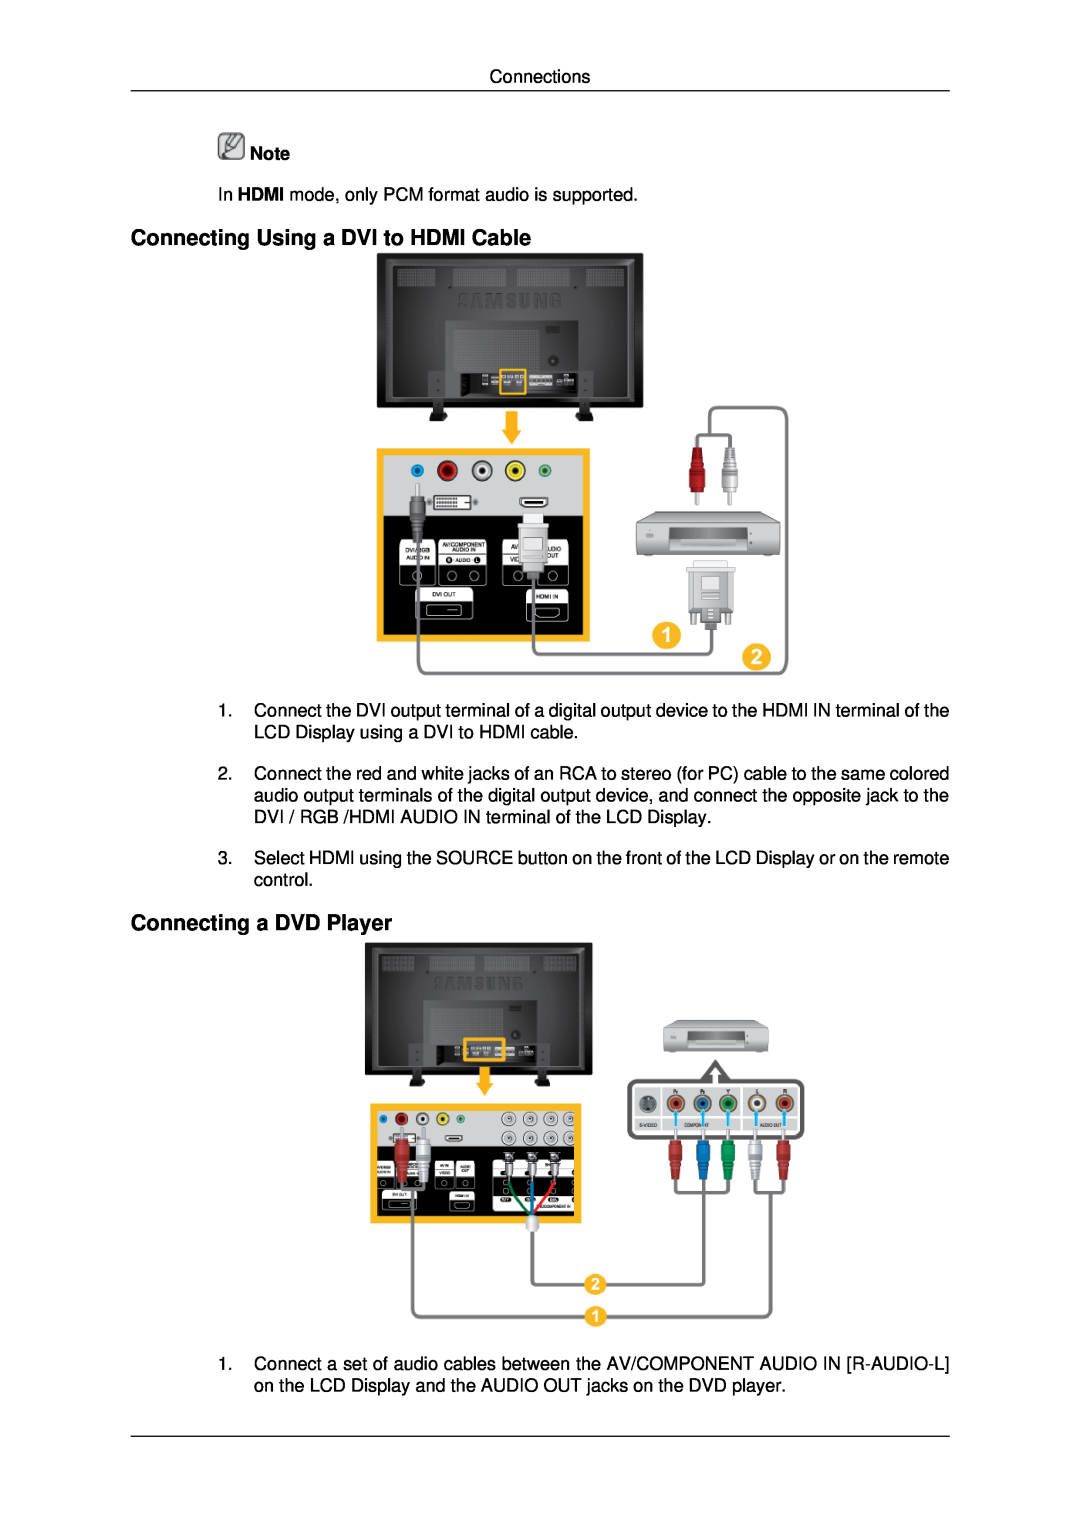 Samsung LH82BVTLBF/EN, LH82BVTMBF/EN, LH82BVSLBF/EN manual Connecting Using a DVI to HDMI Cable, Connecting a DVD Player 